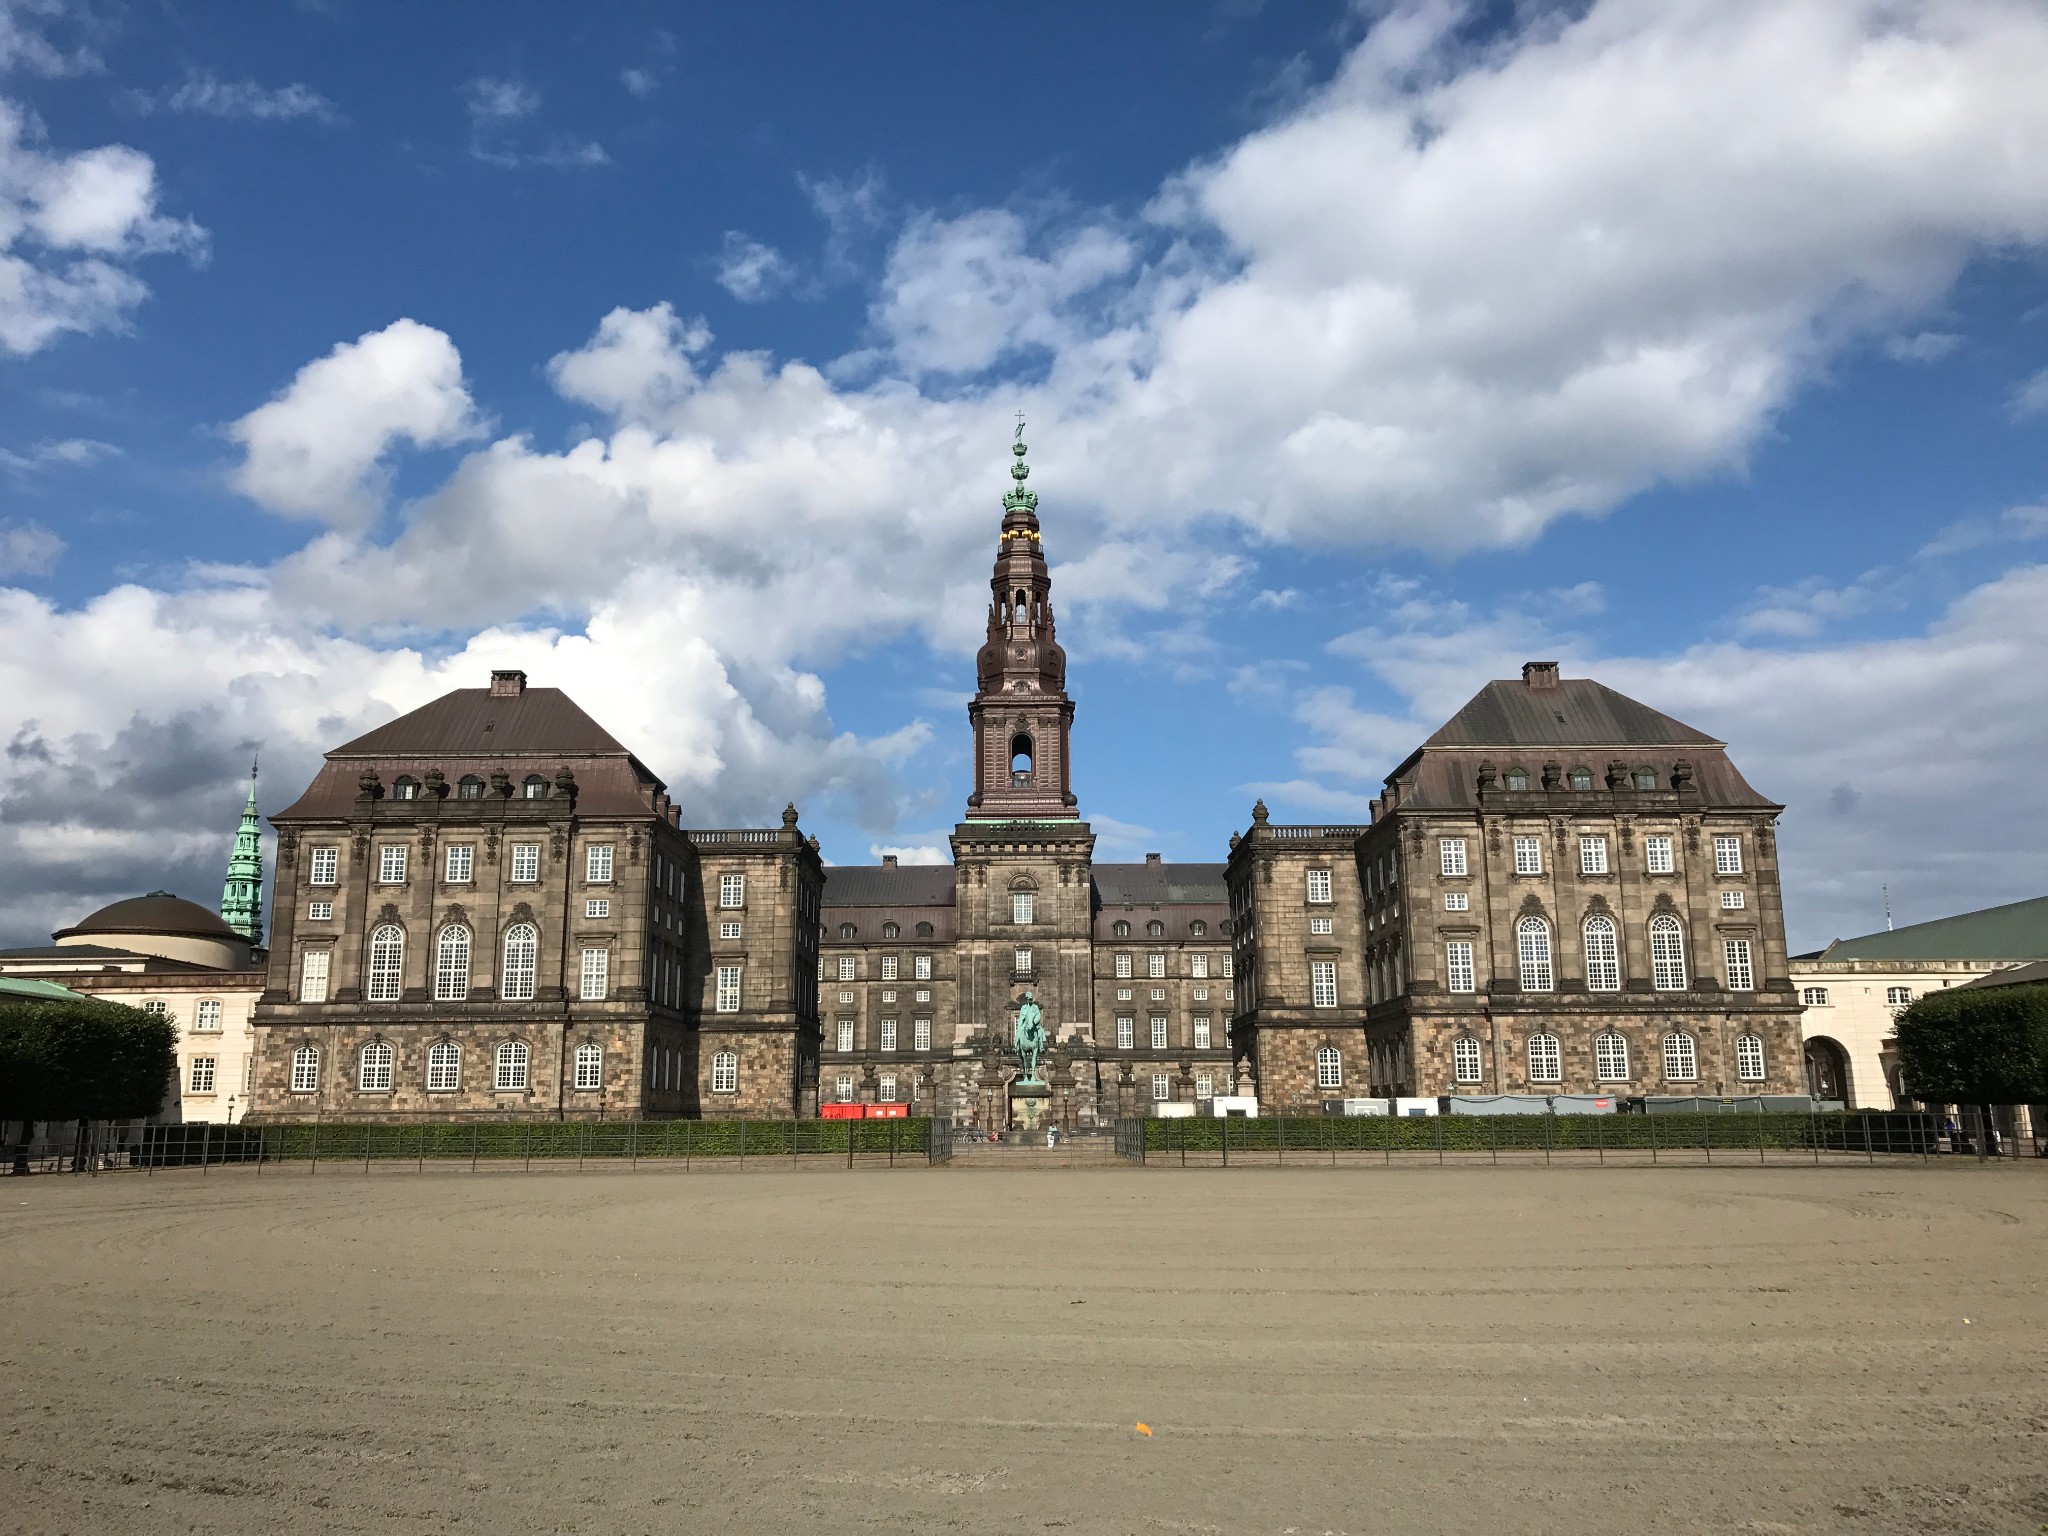 christiansborg palace图片